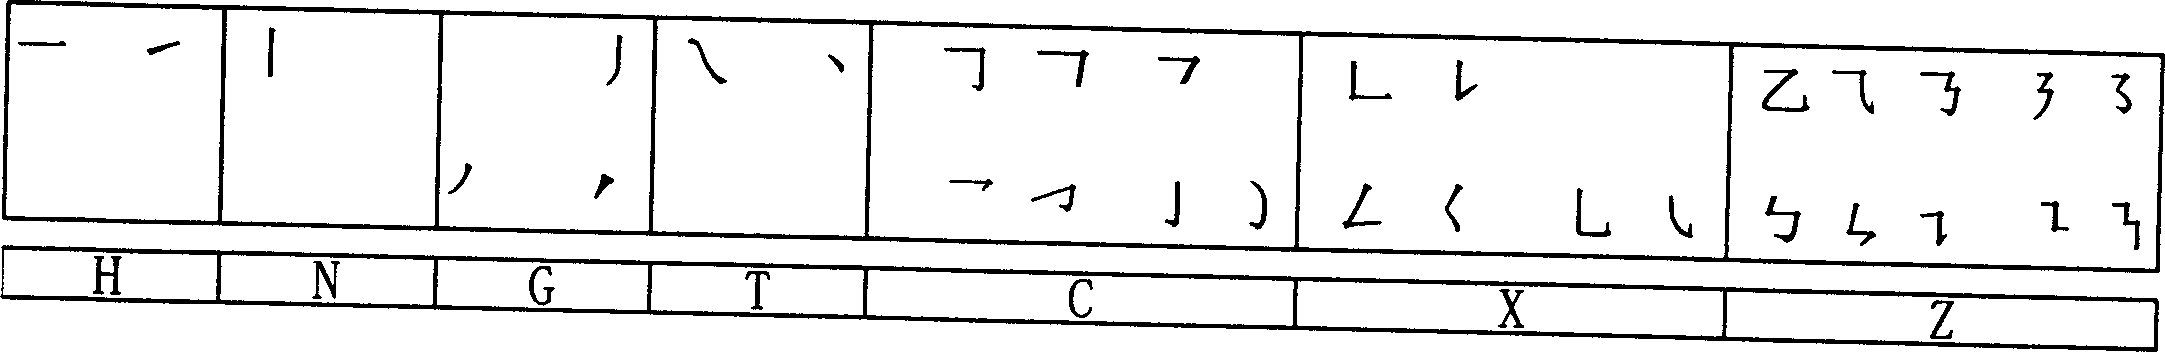 Chinese character standardization stroke order coding method